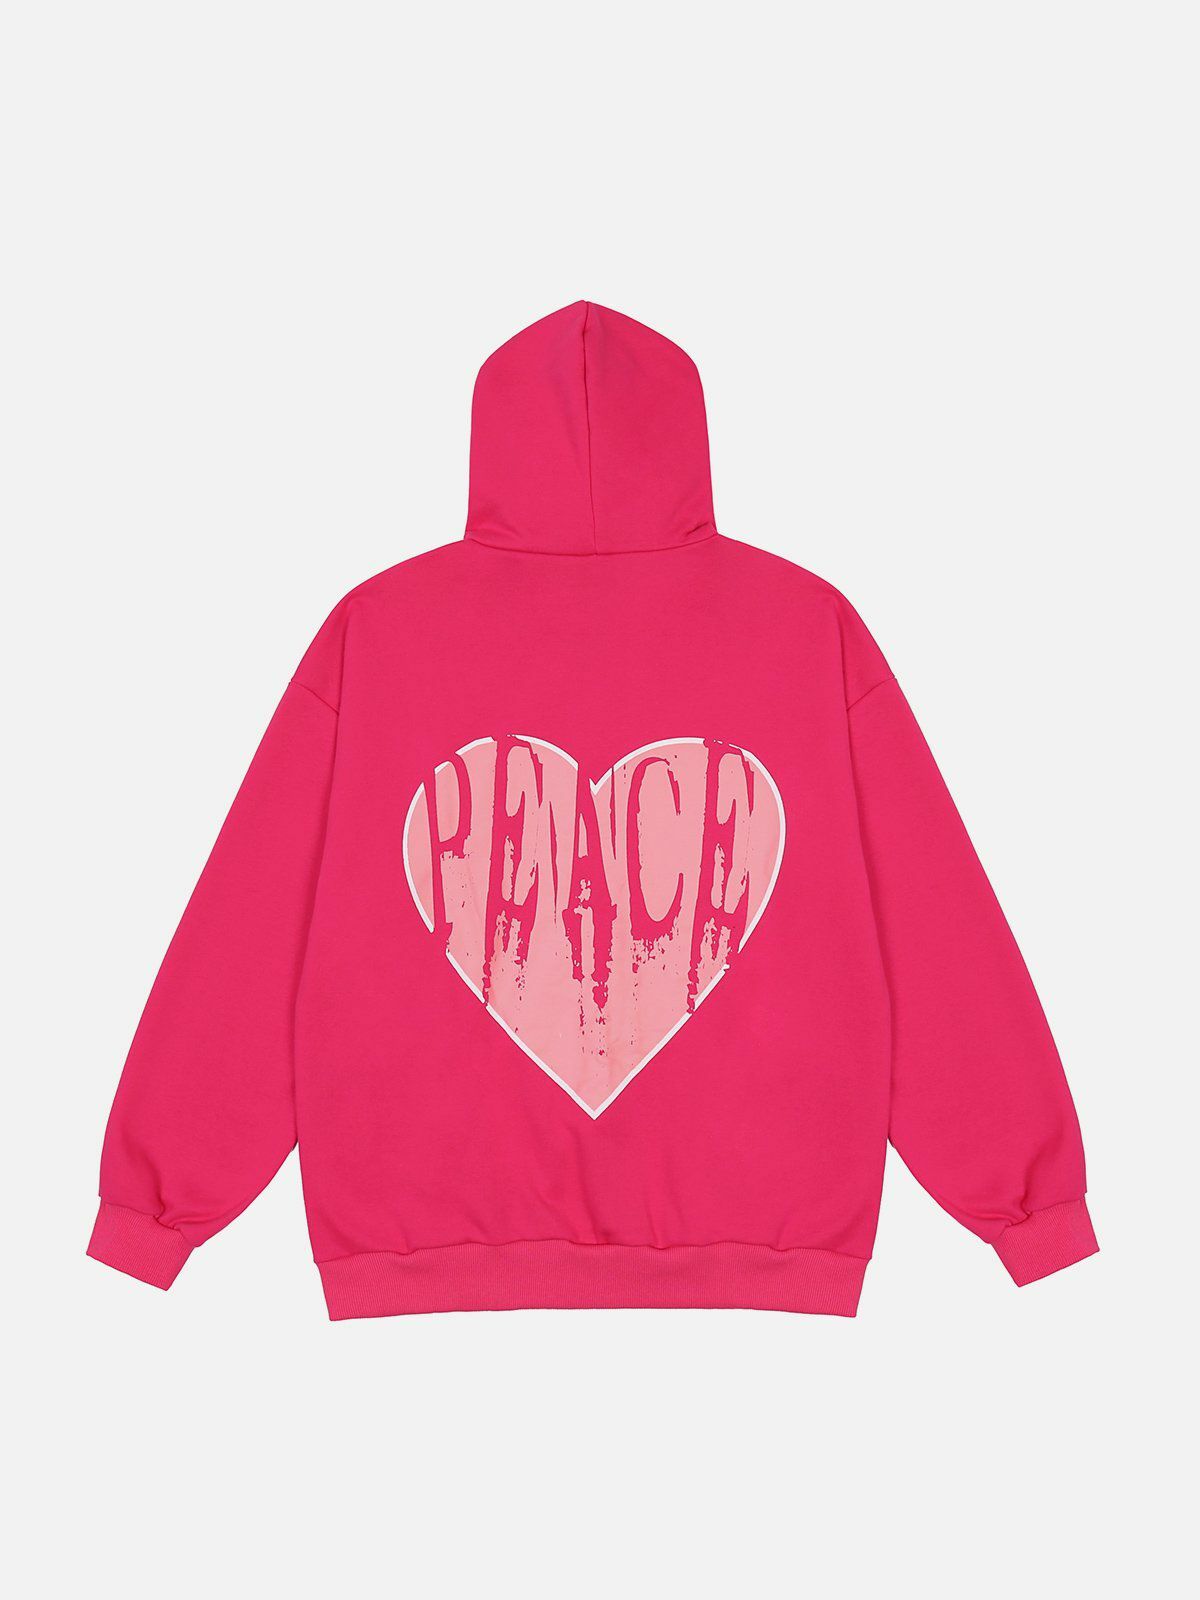 peace & love cardigan hoodie retro vibes & cozy style 4474